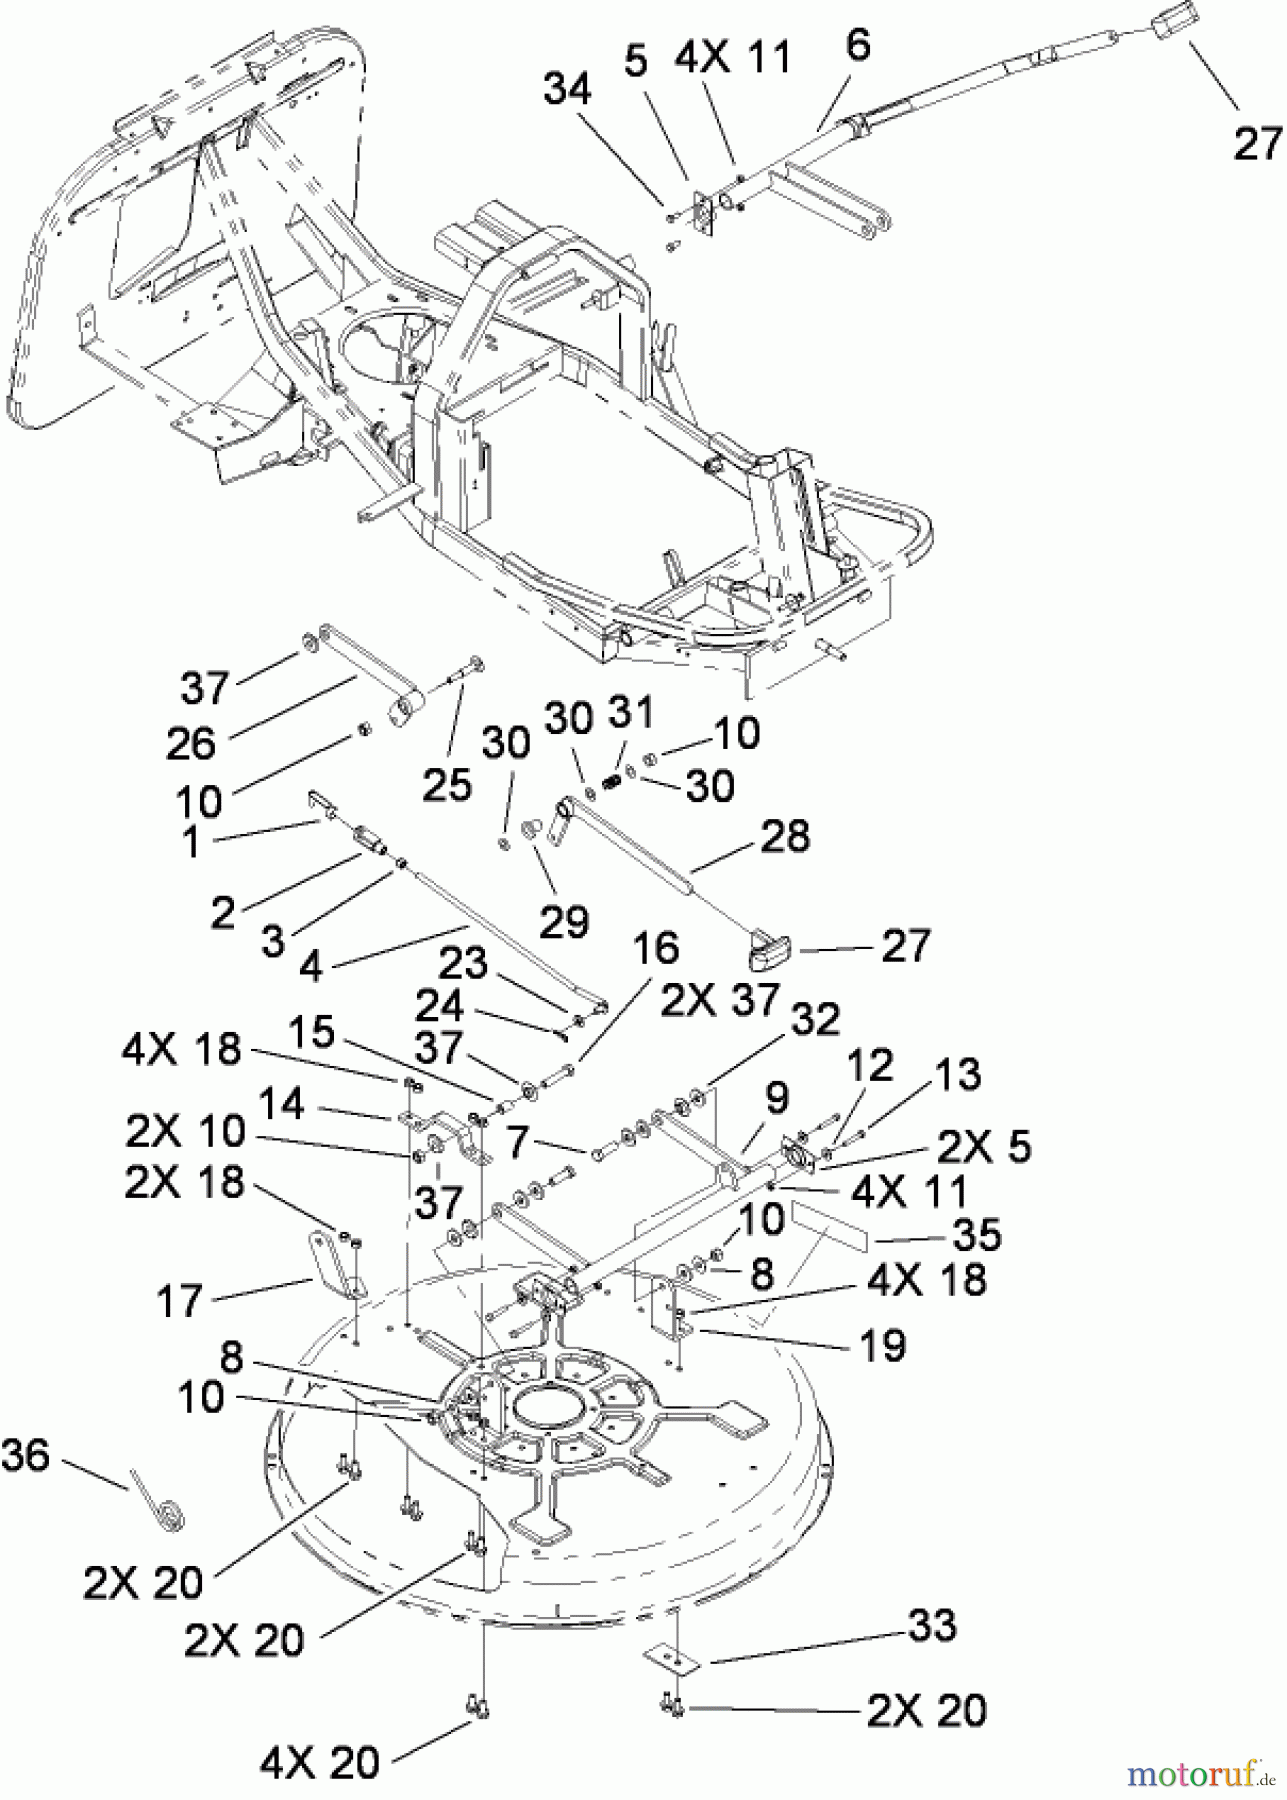  Toro Neu Mowers, Rear-Engine Rider 70186 (H132) - Toro H132 Rear-Engine Riding Mower, 2008 (270805636-280899434) DECK SUSPENSION ASSEMBLY